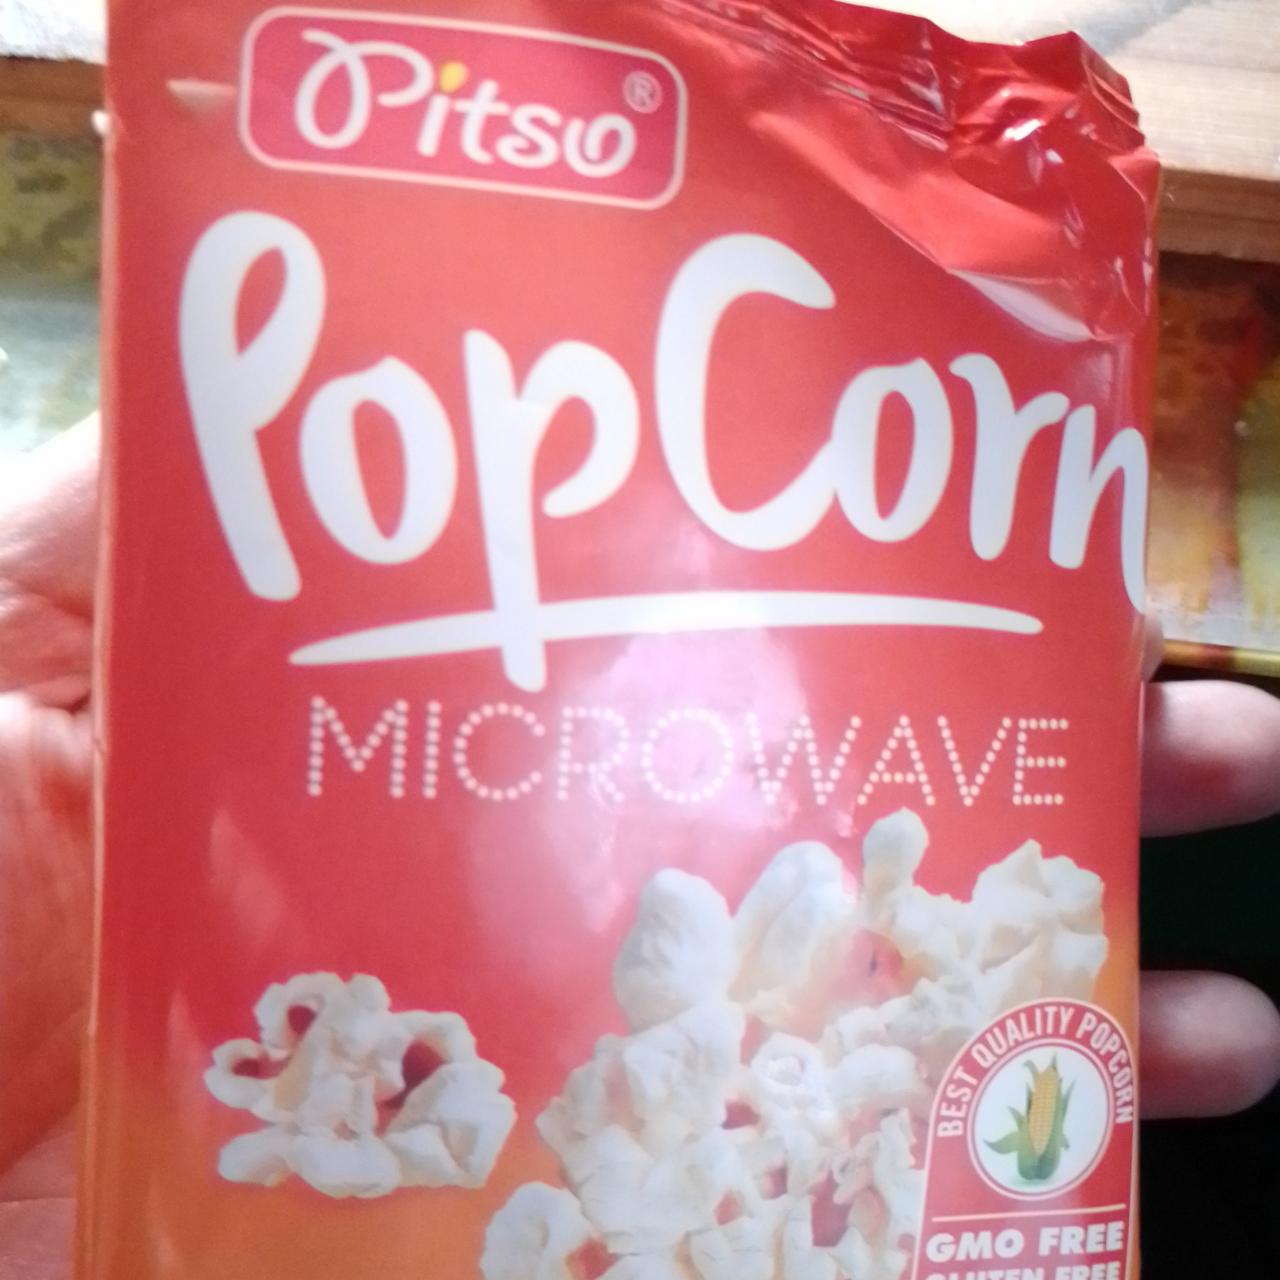 Fotografie - Popcorn microwave butter flavor Pitso